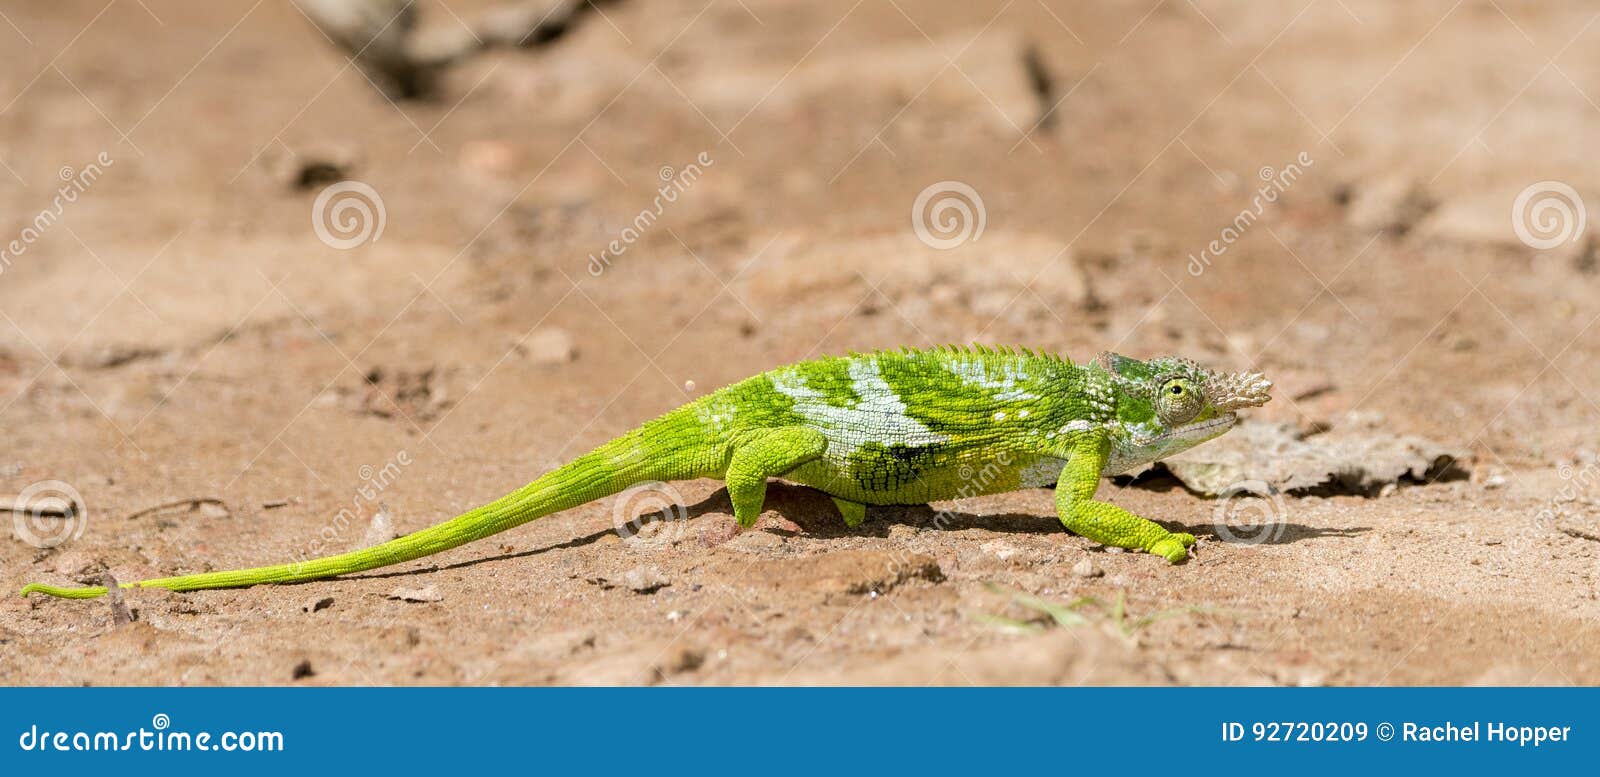 the endemic & threatened usambara two-horned chameleon kinyongia multituberculata in tanzania